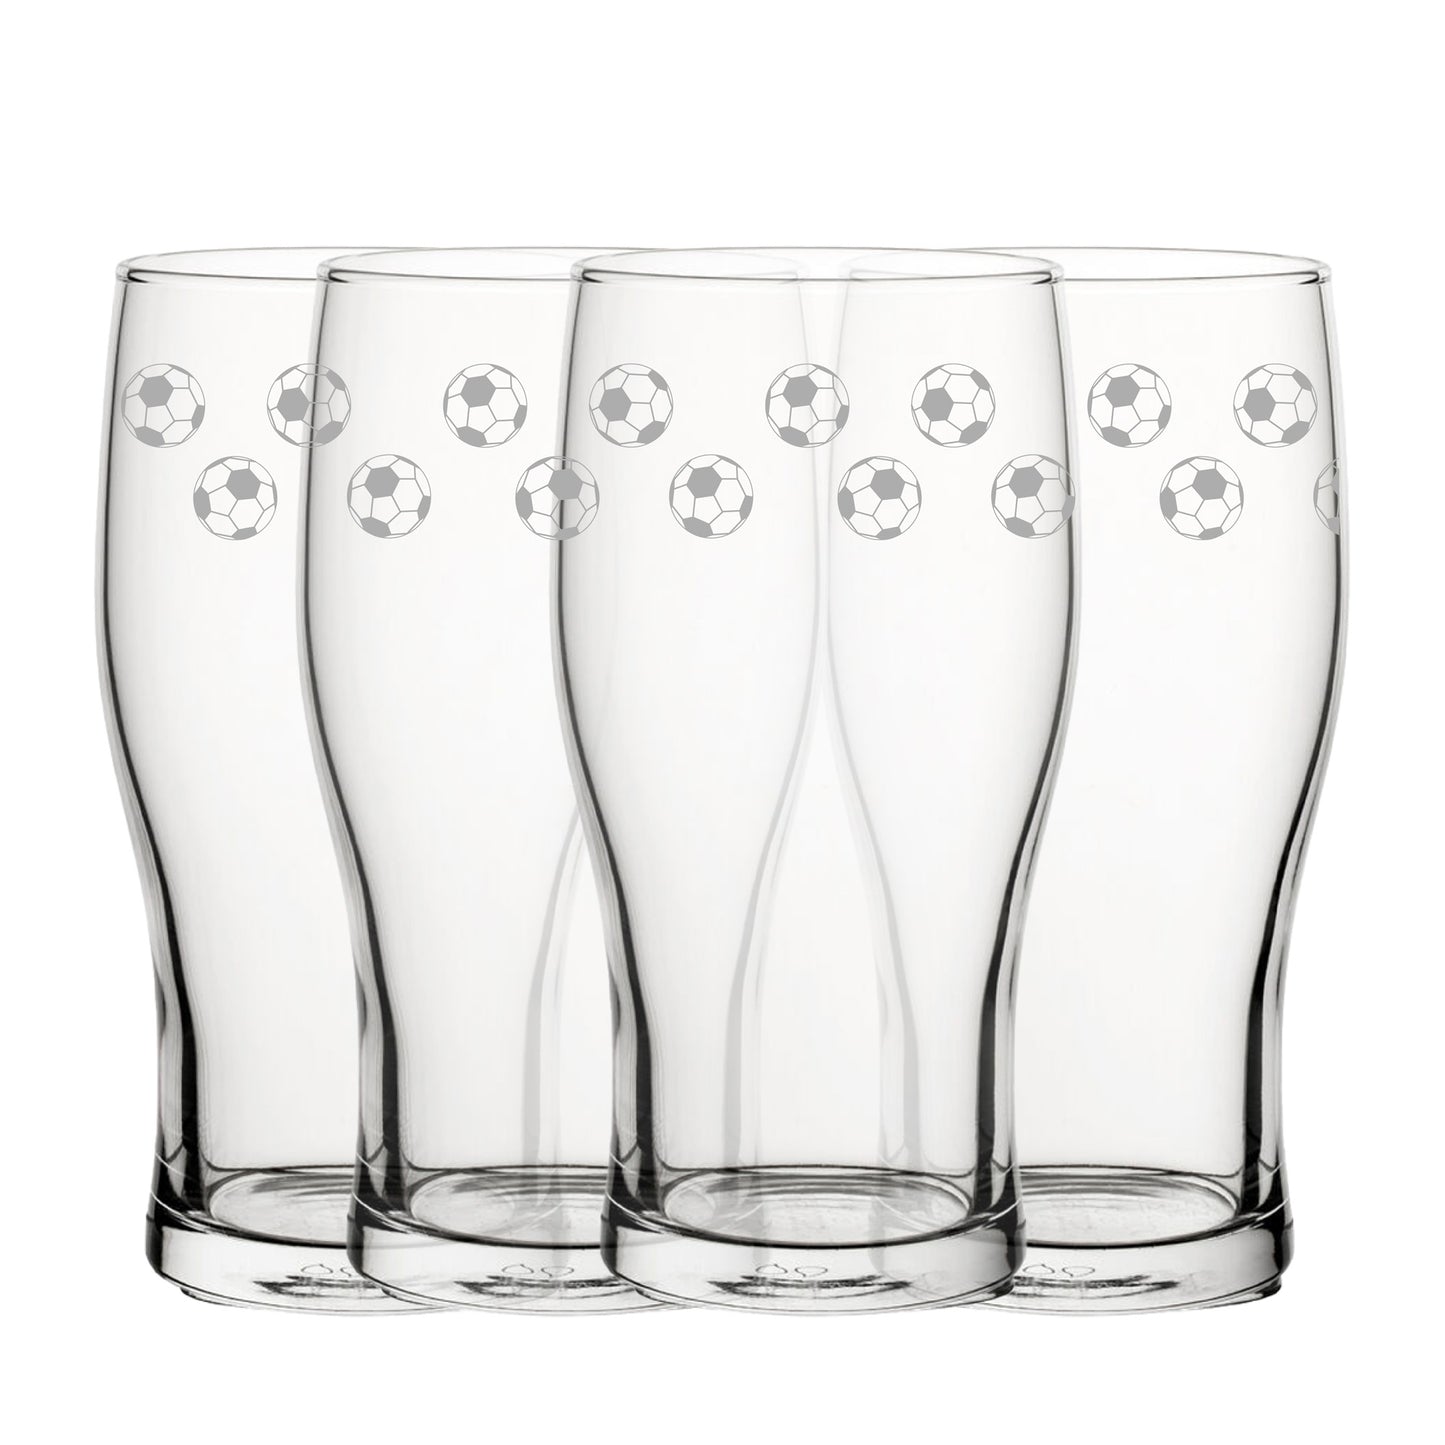 Engraved Football Pattern Pint Glass Set of 4, 20oz Tulip Glasses Image 2